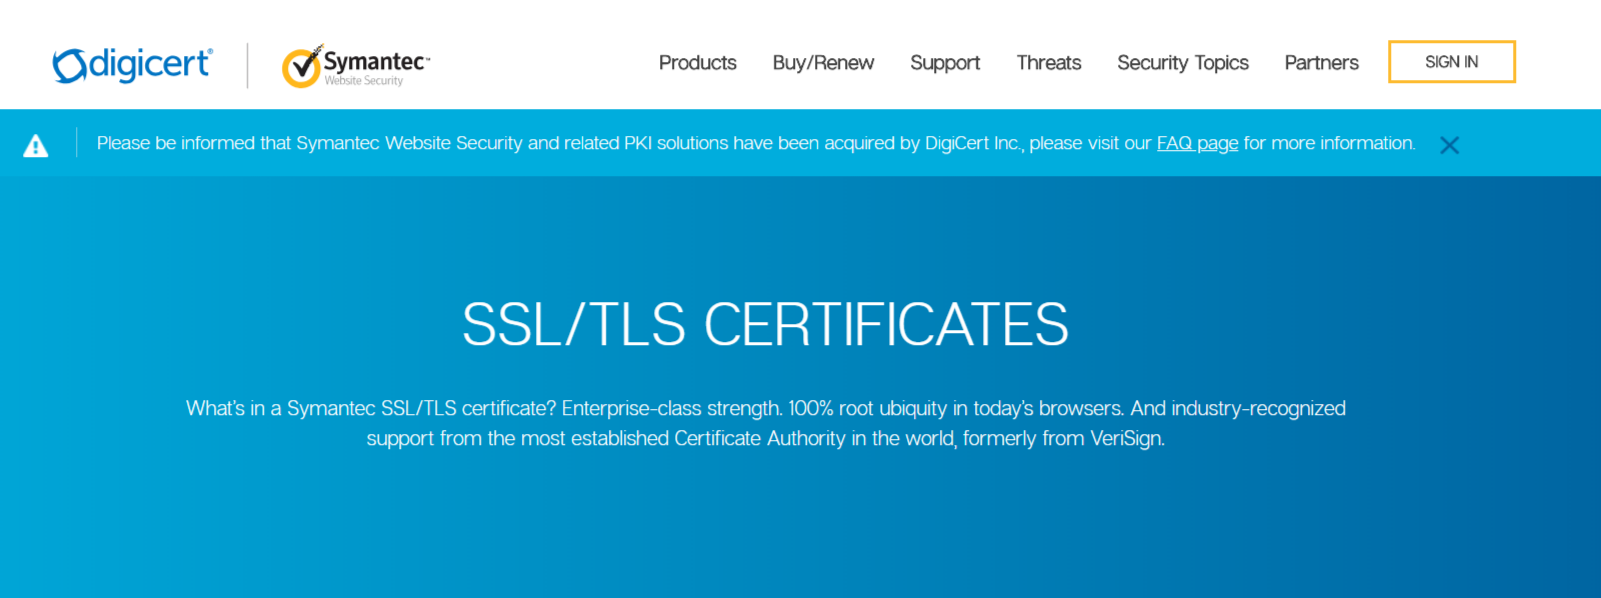 Symantec- Trust Badges To Increase Sales Conversion